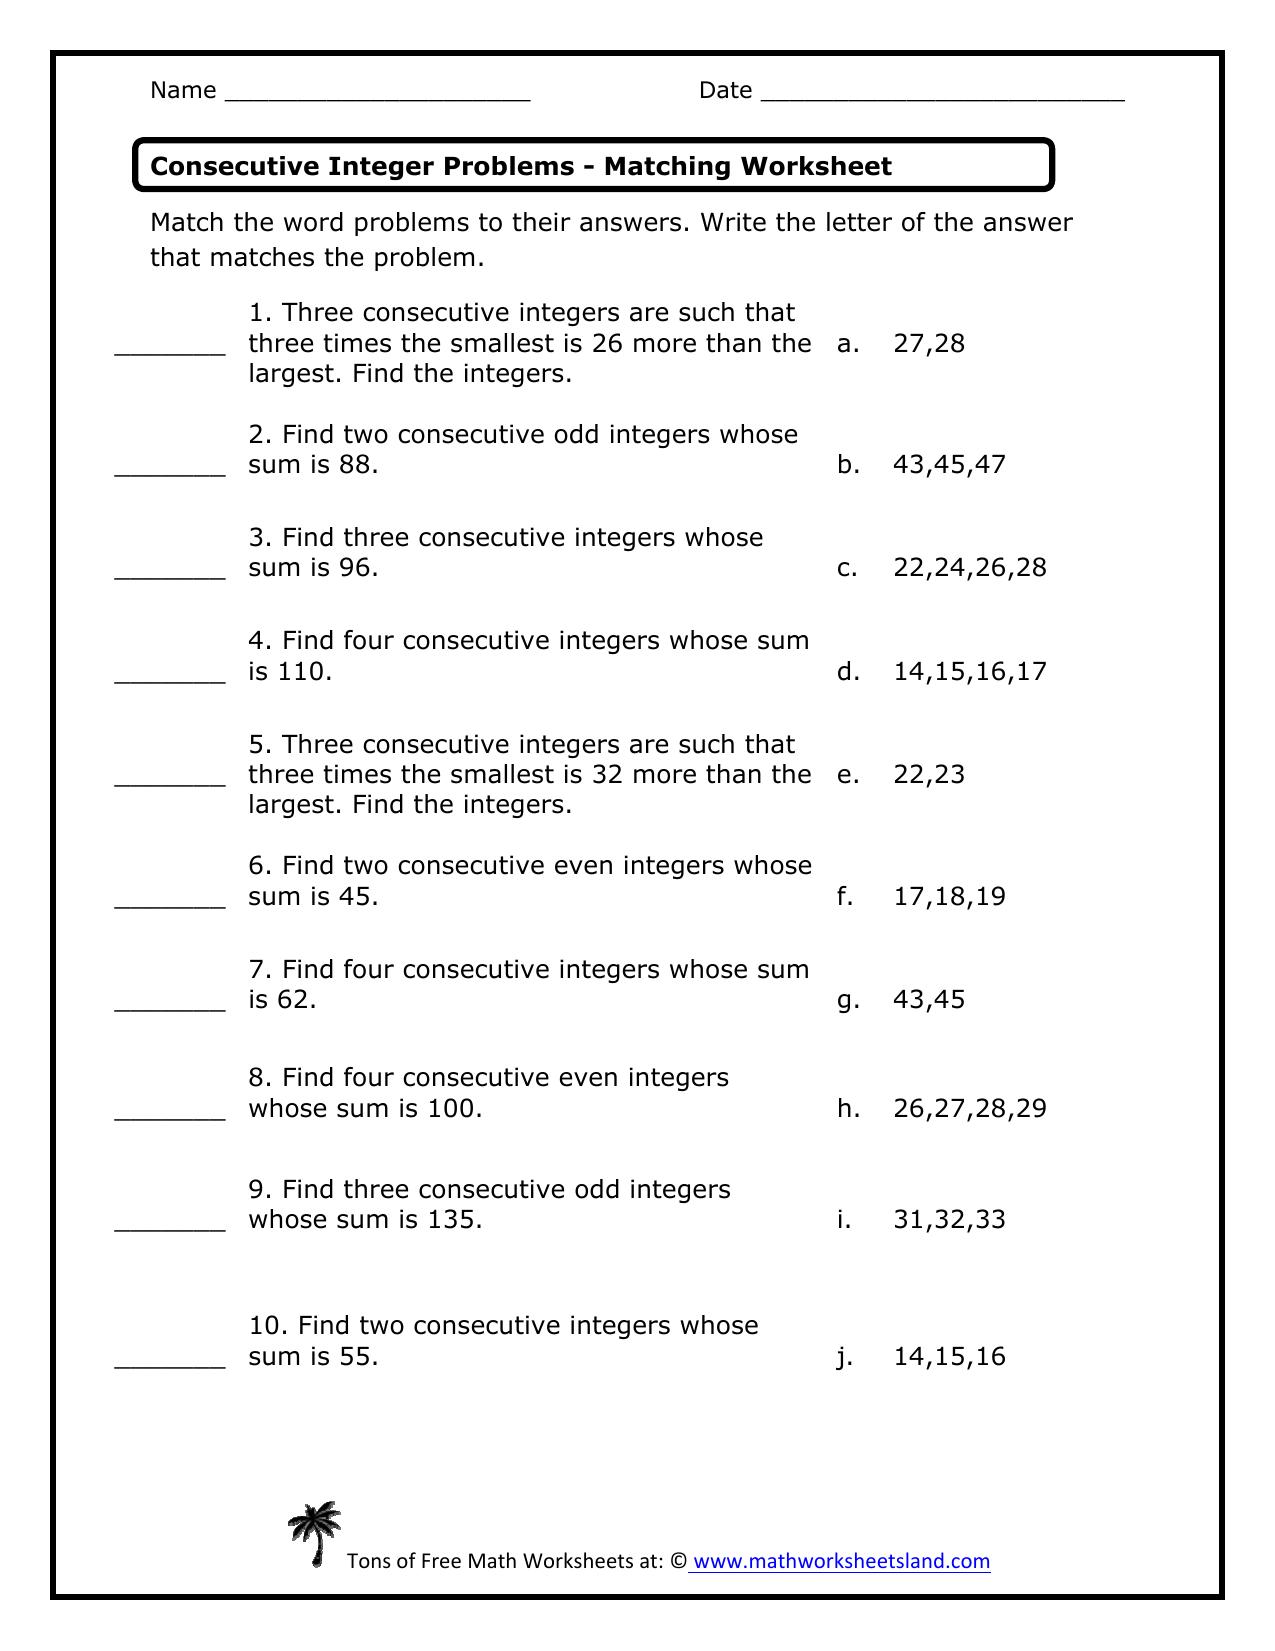 g22 Consecutive Integer Problems - Matching Worksheet Regarding Integers Word Problems Worksheet